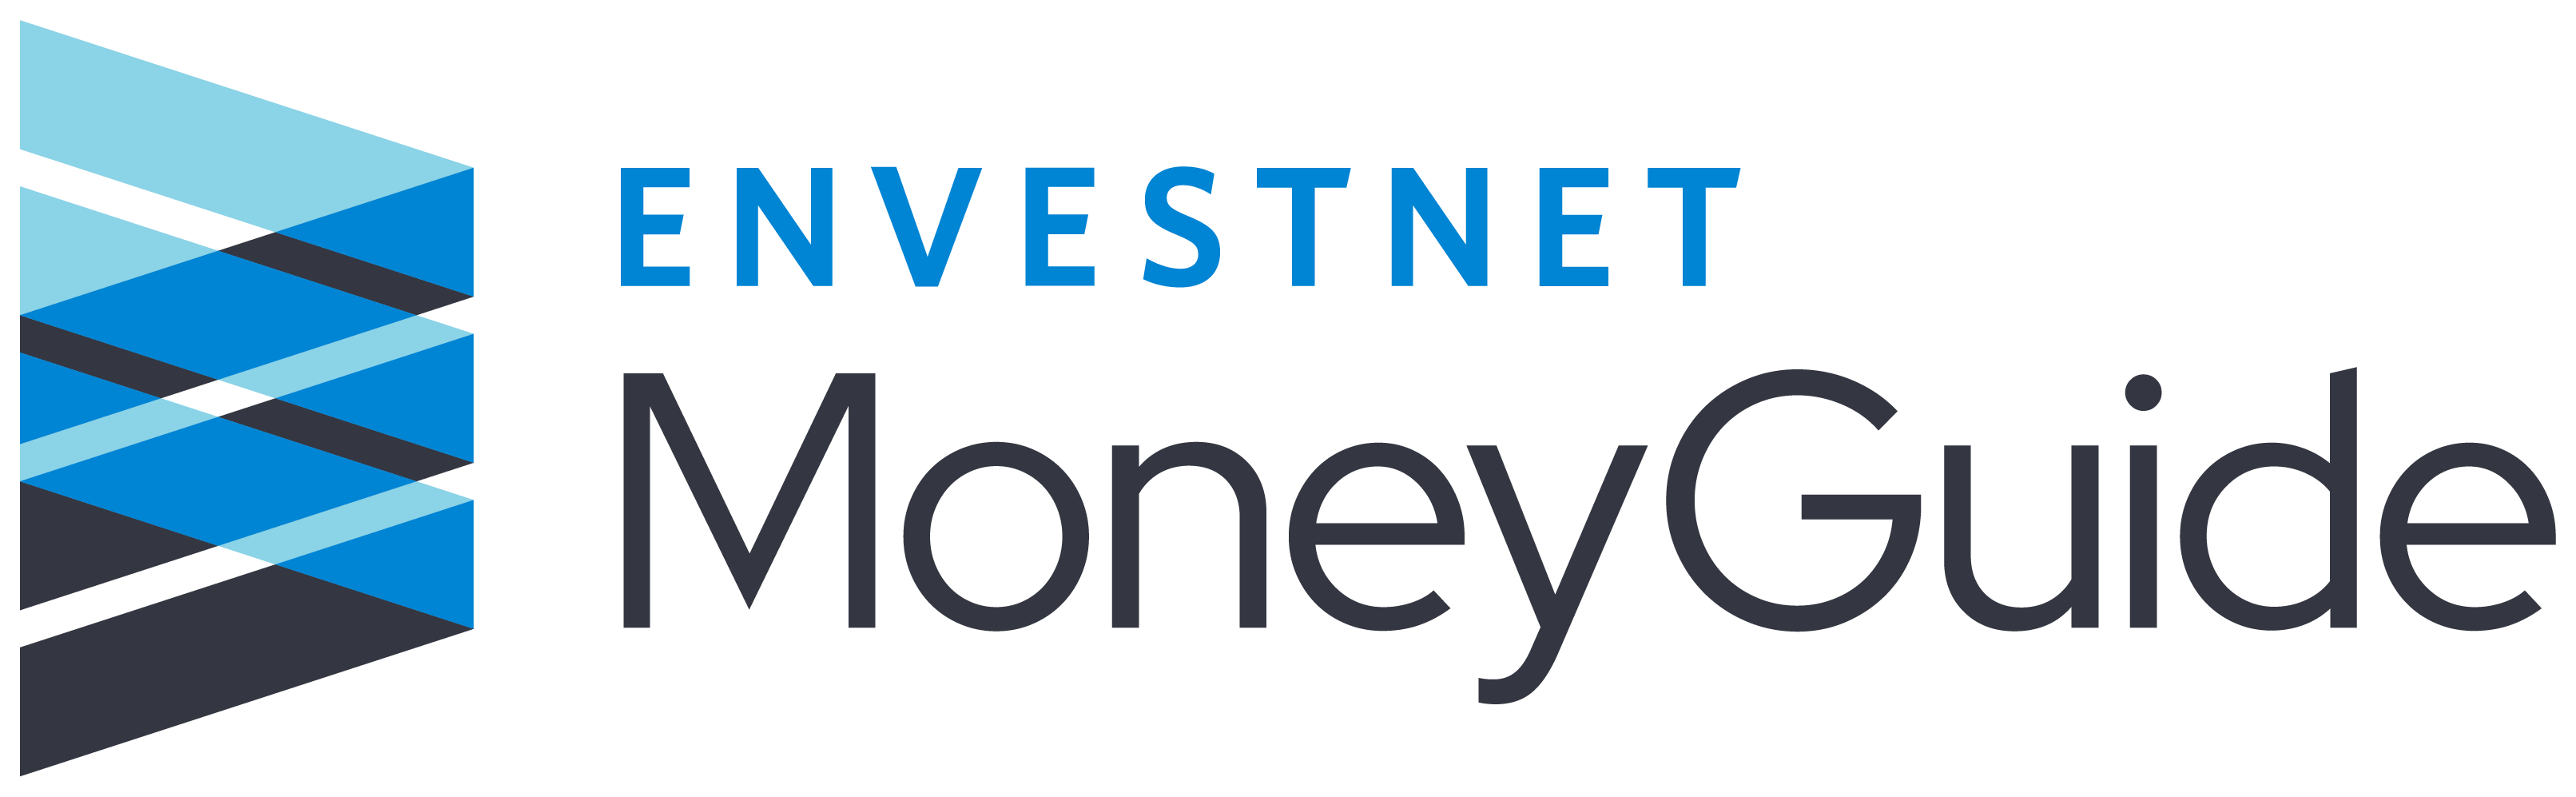 Evestnest MoneyGuide Logo